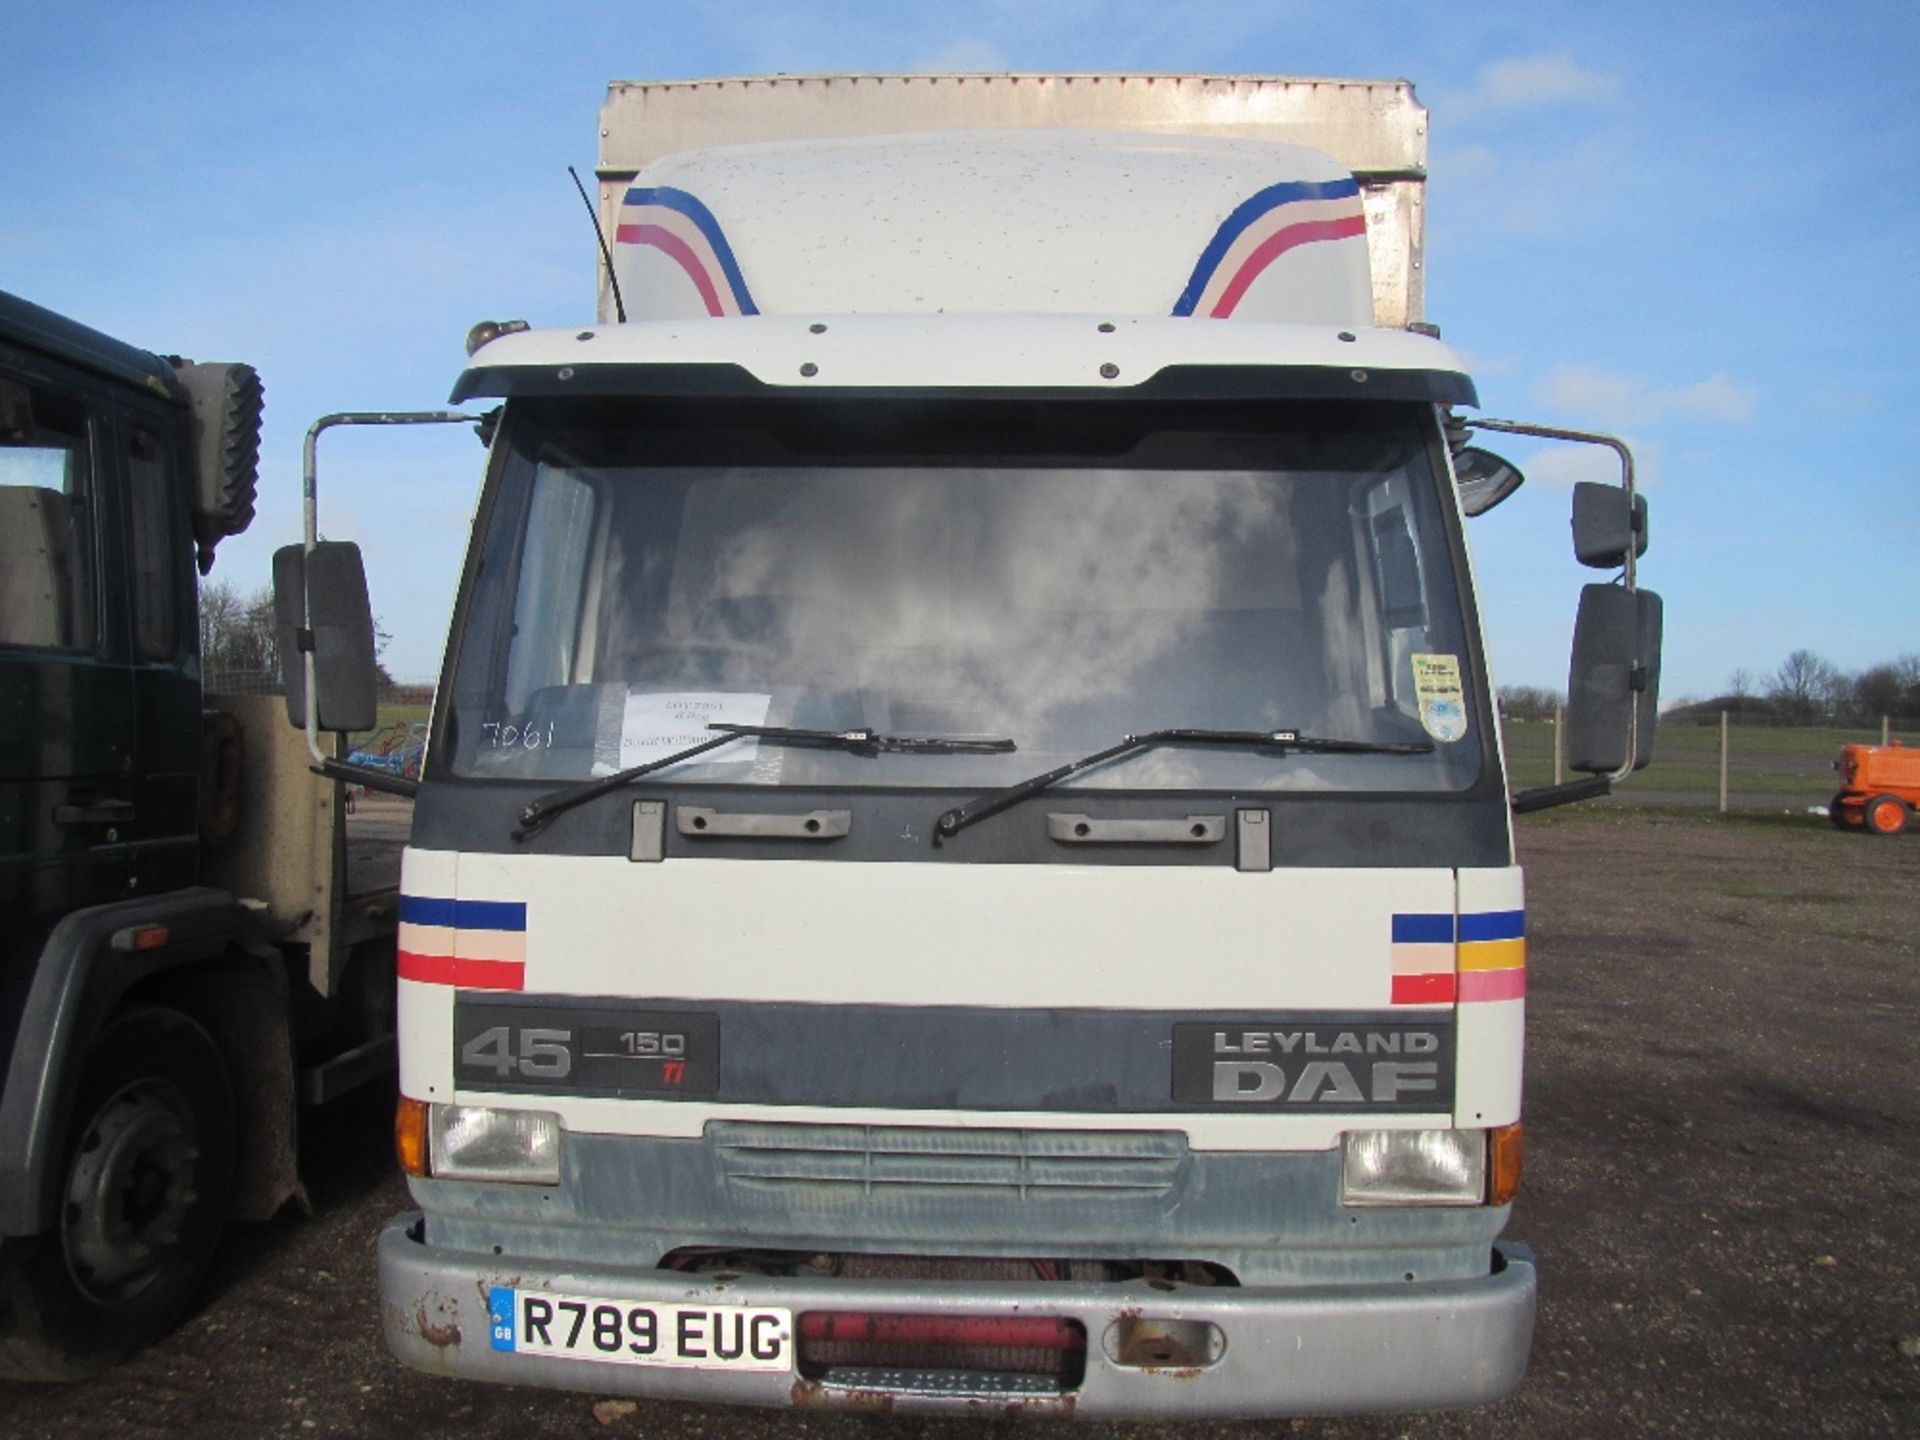 Daf 150 Lorry c/w V5 Mileage: 158,950. No MOT Reg. No. R789 EUG - Image 2 of 8